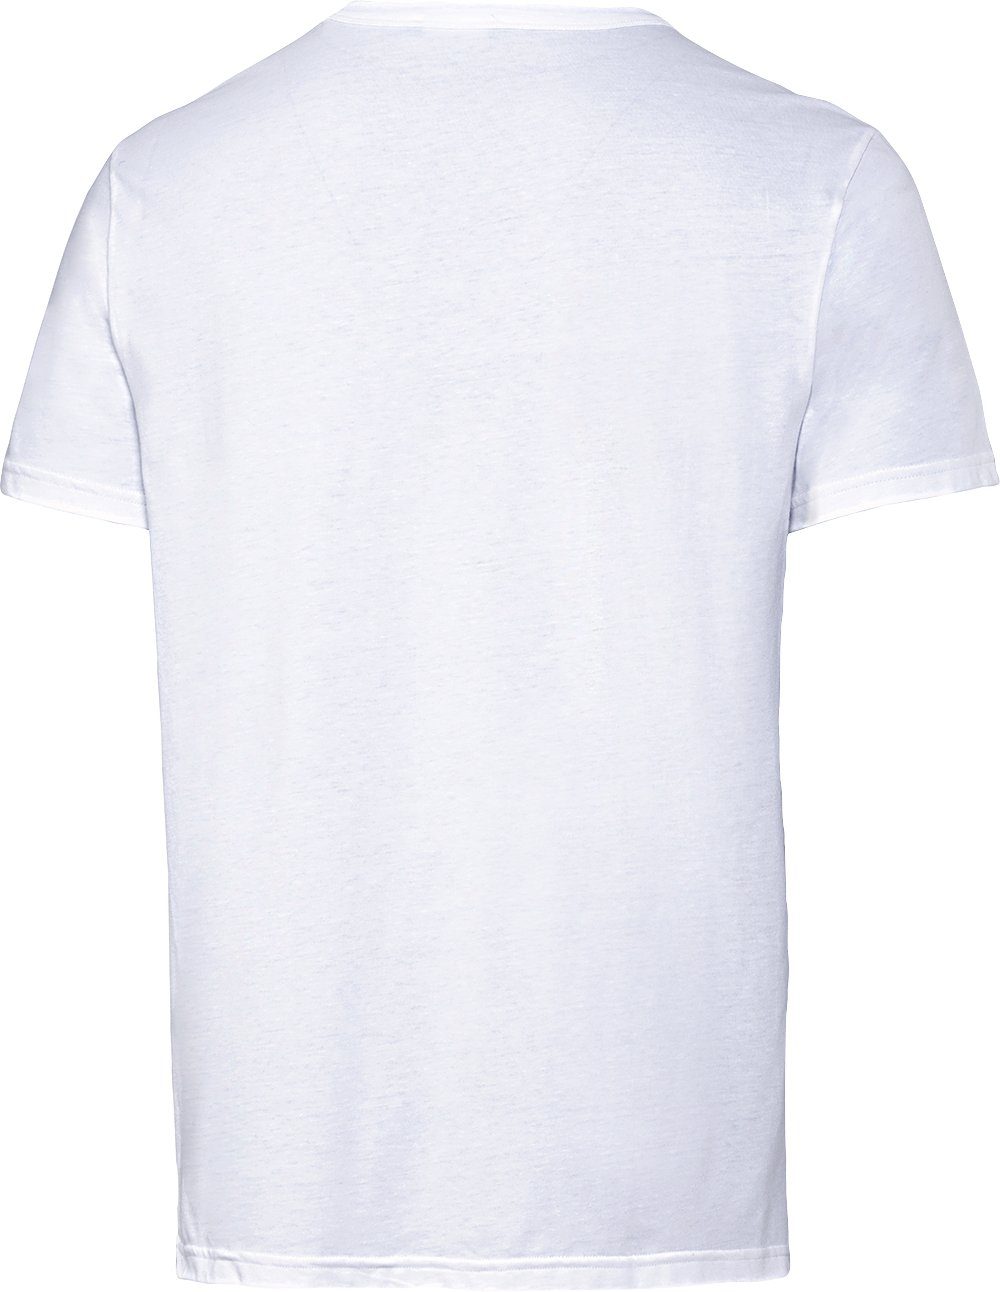 Baumwolle Benetton aus of weiß Colors T-Shirt United